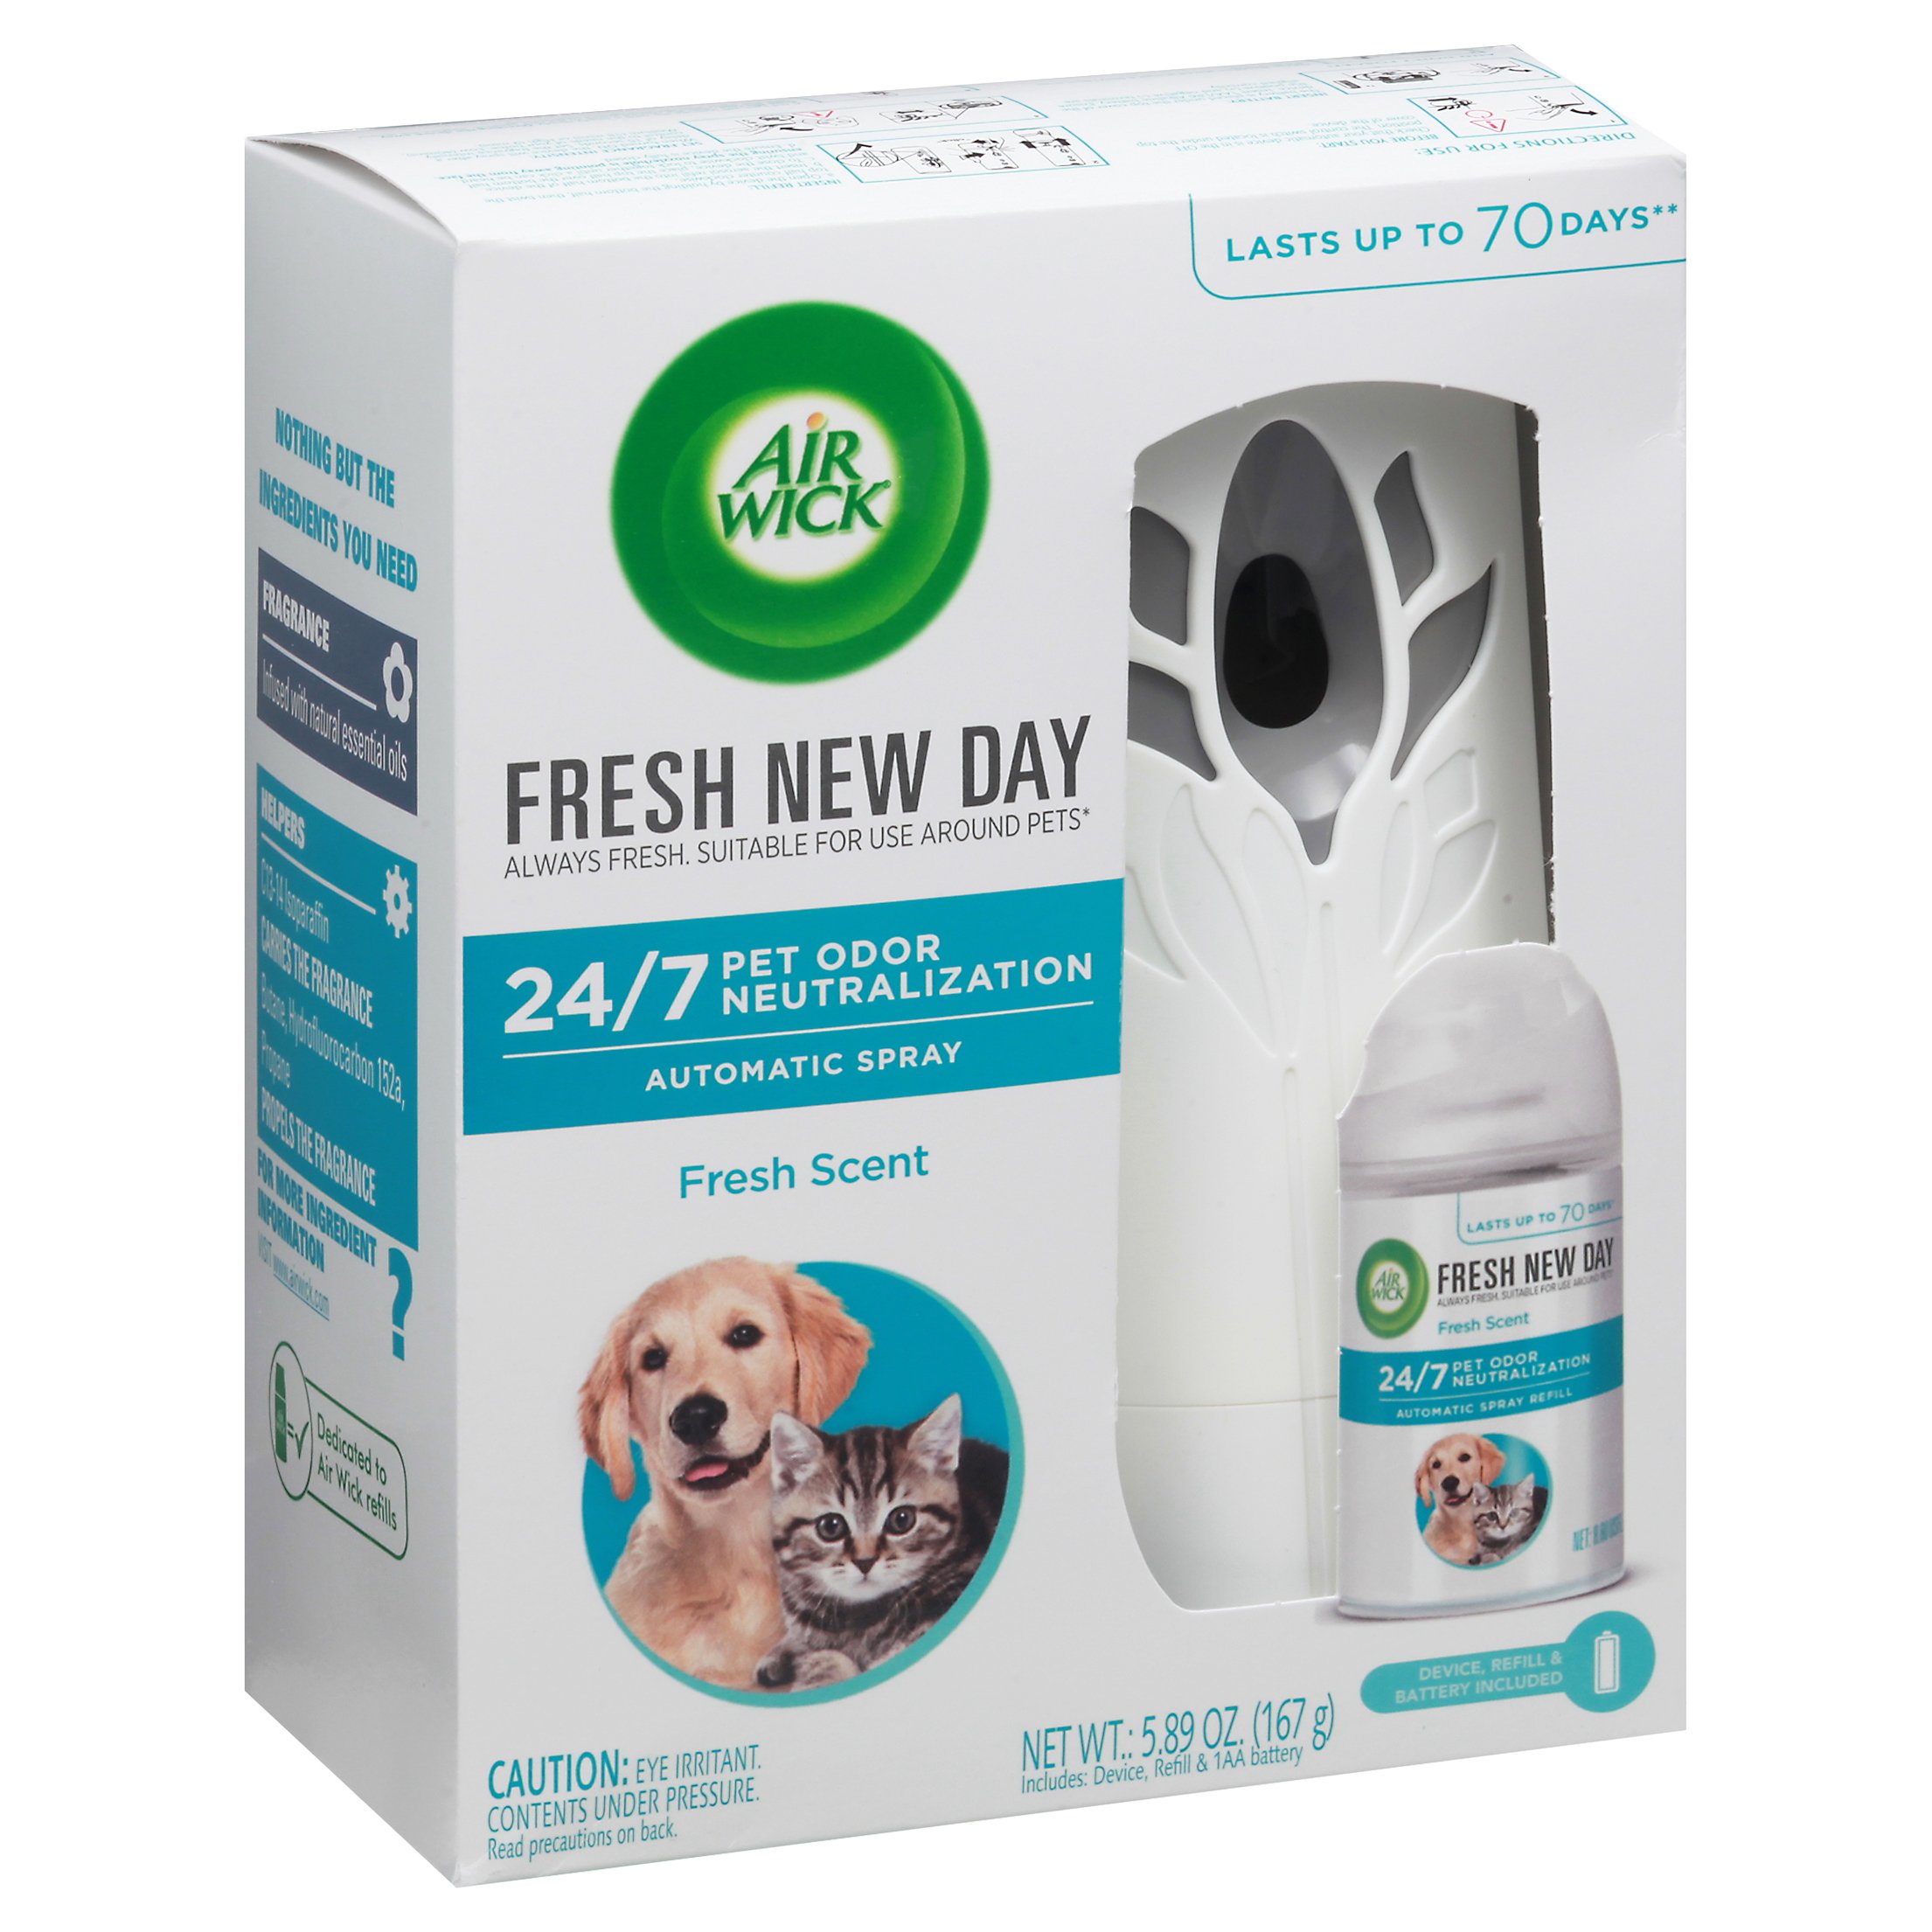 Airwick Pet Odor Neutralization Fresh Scent Automatic Spray Starter Kit